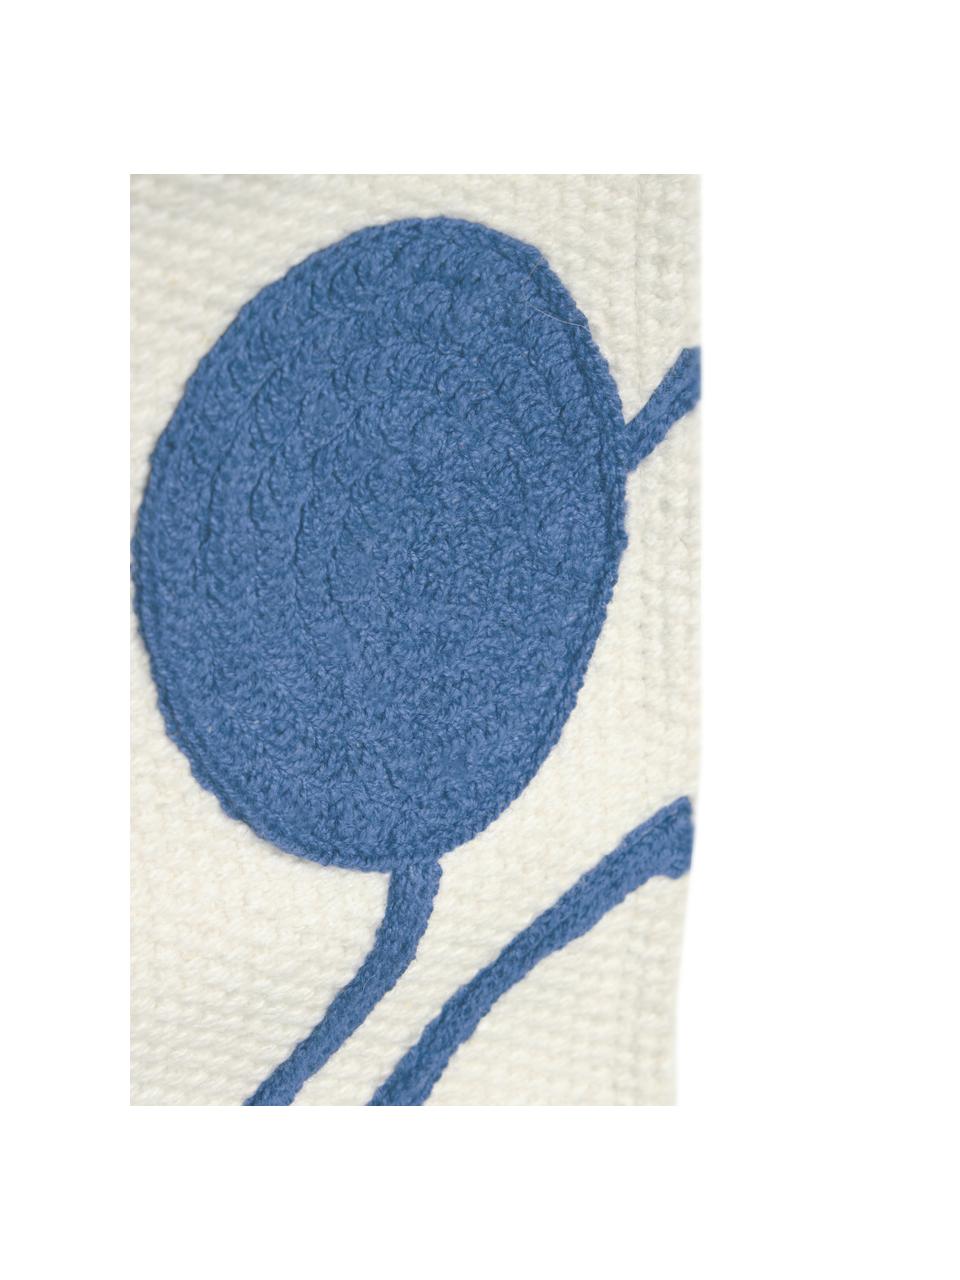 Nástěnná dekorace Atal, Krémově bílá, modrá, Š 28 cm, V 25 cm